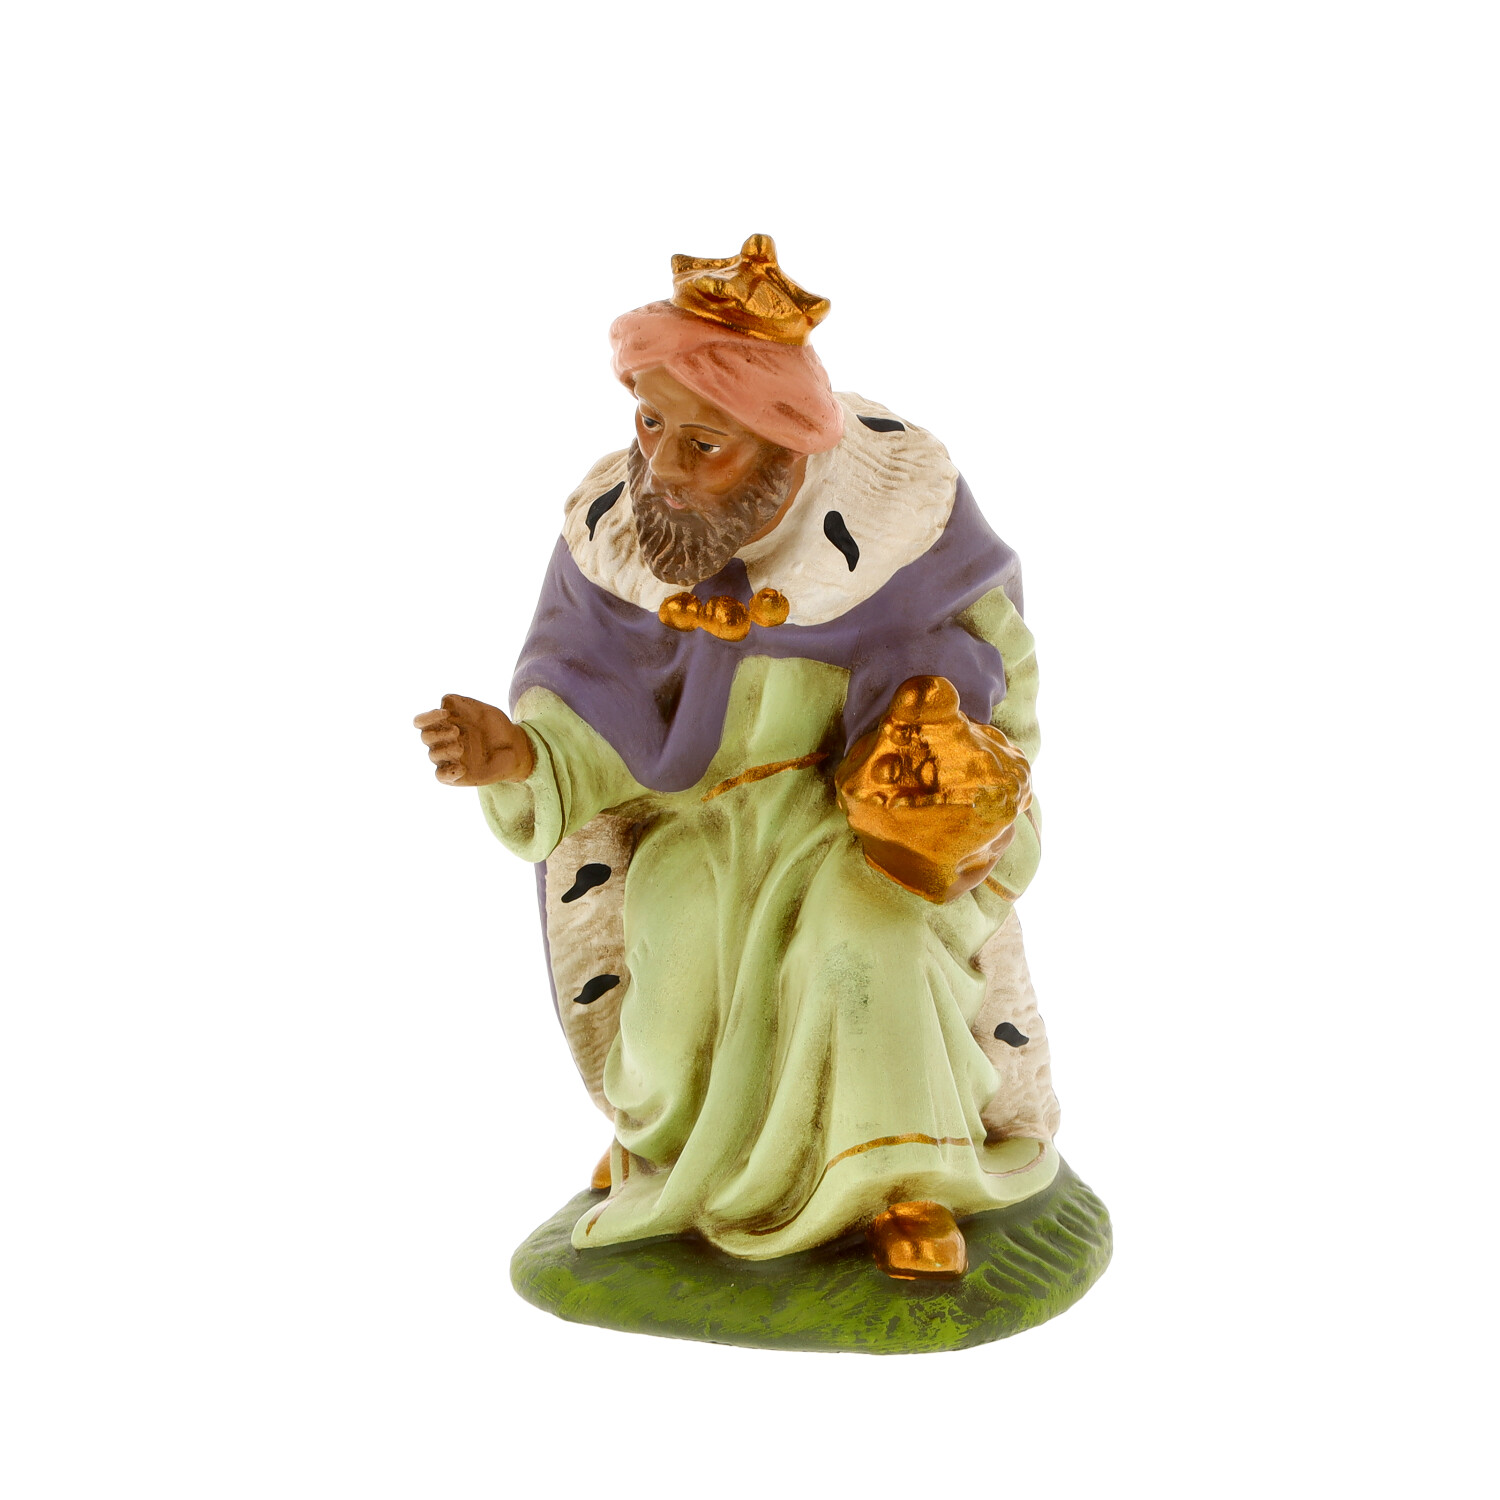 Brown King - Marolin Nativity figure - made in Germany